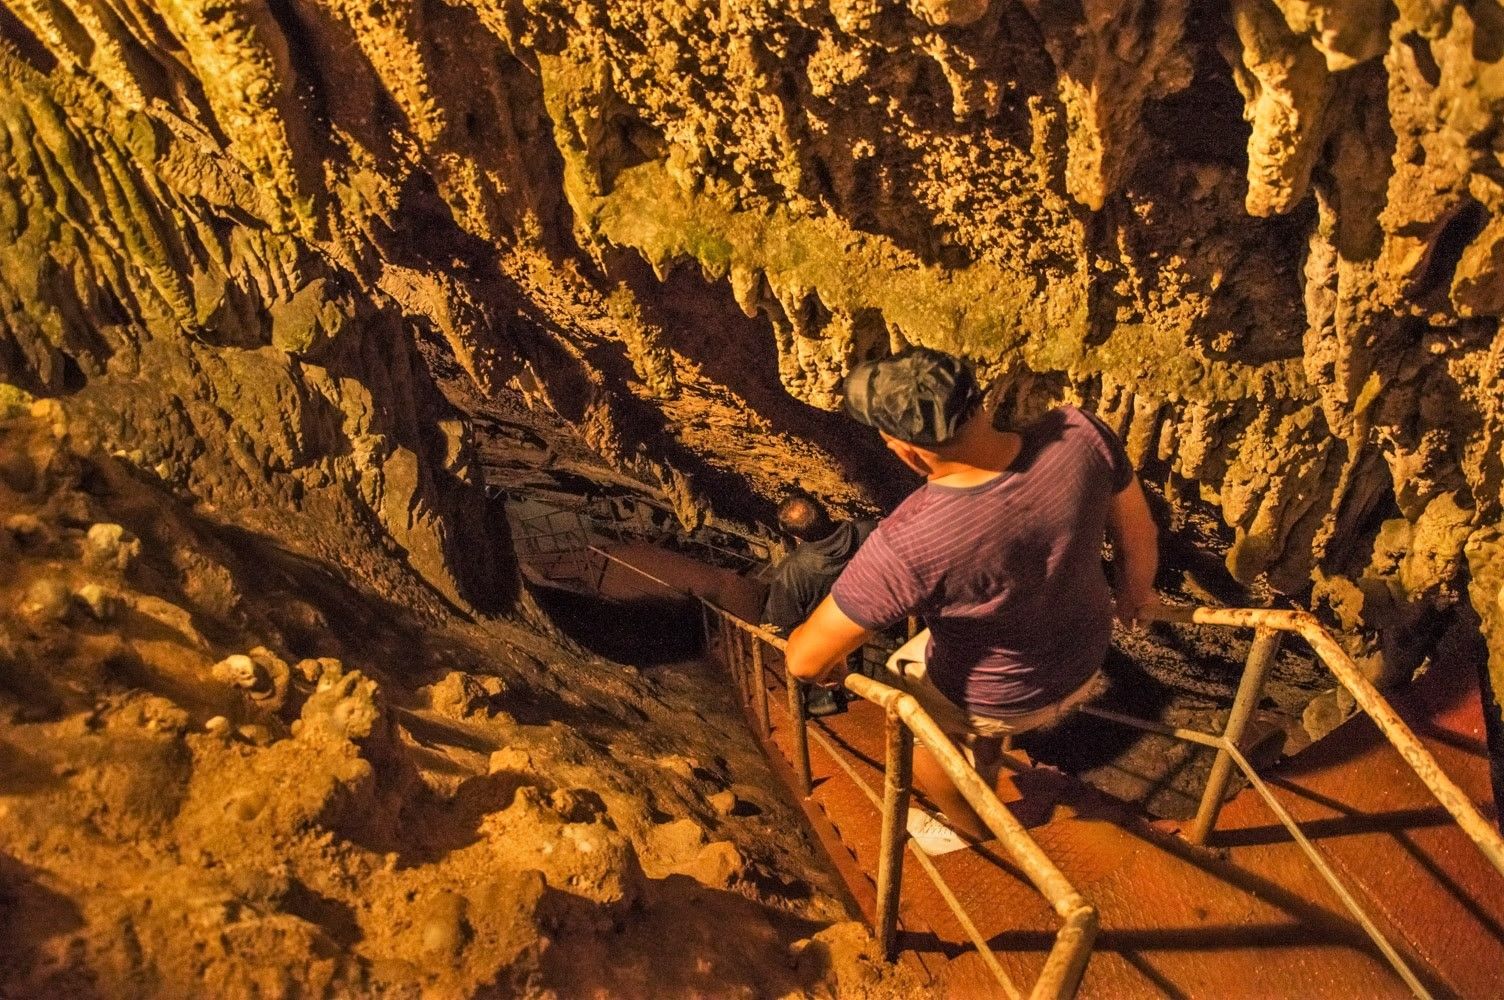 Пещера Ухловица